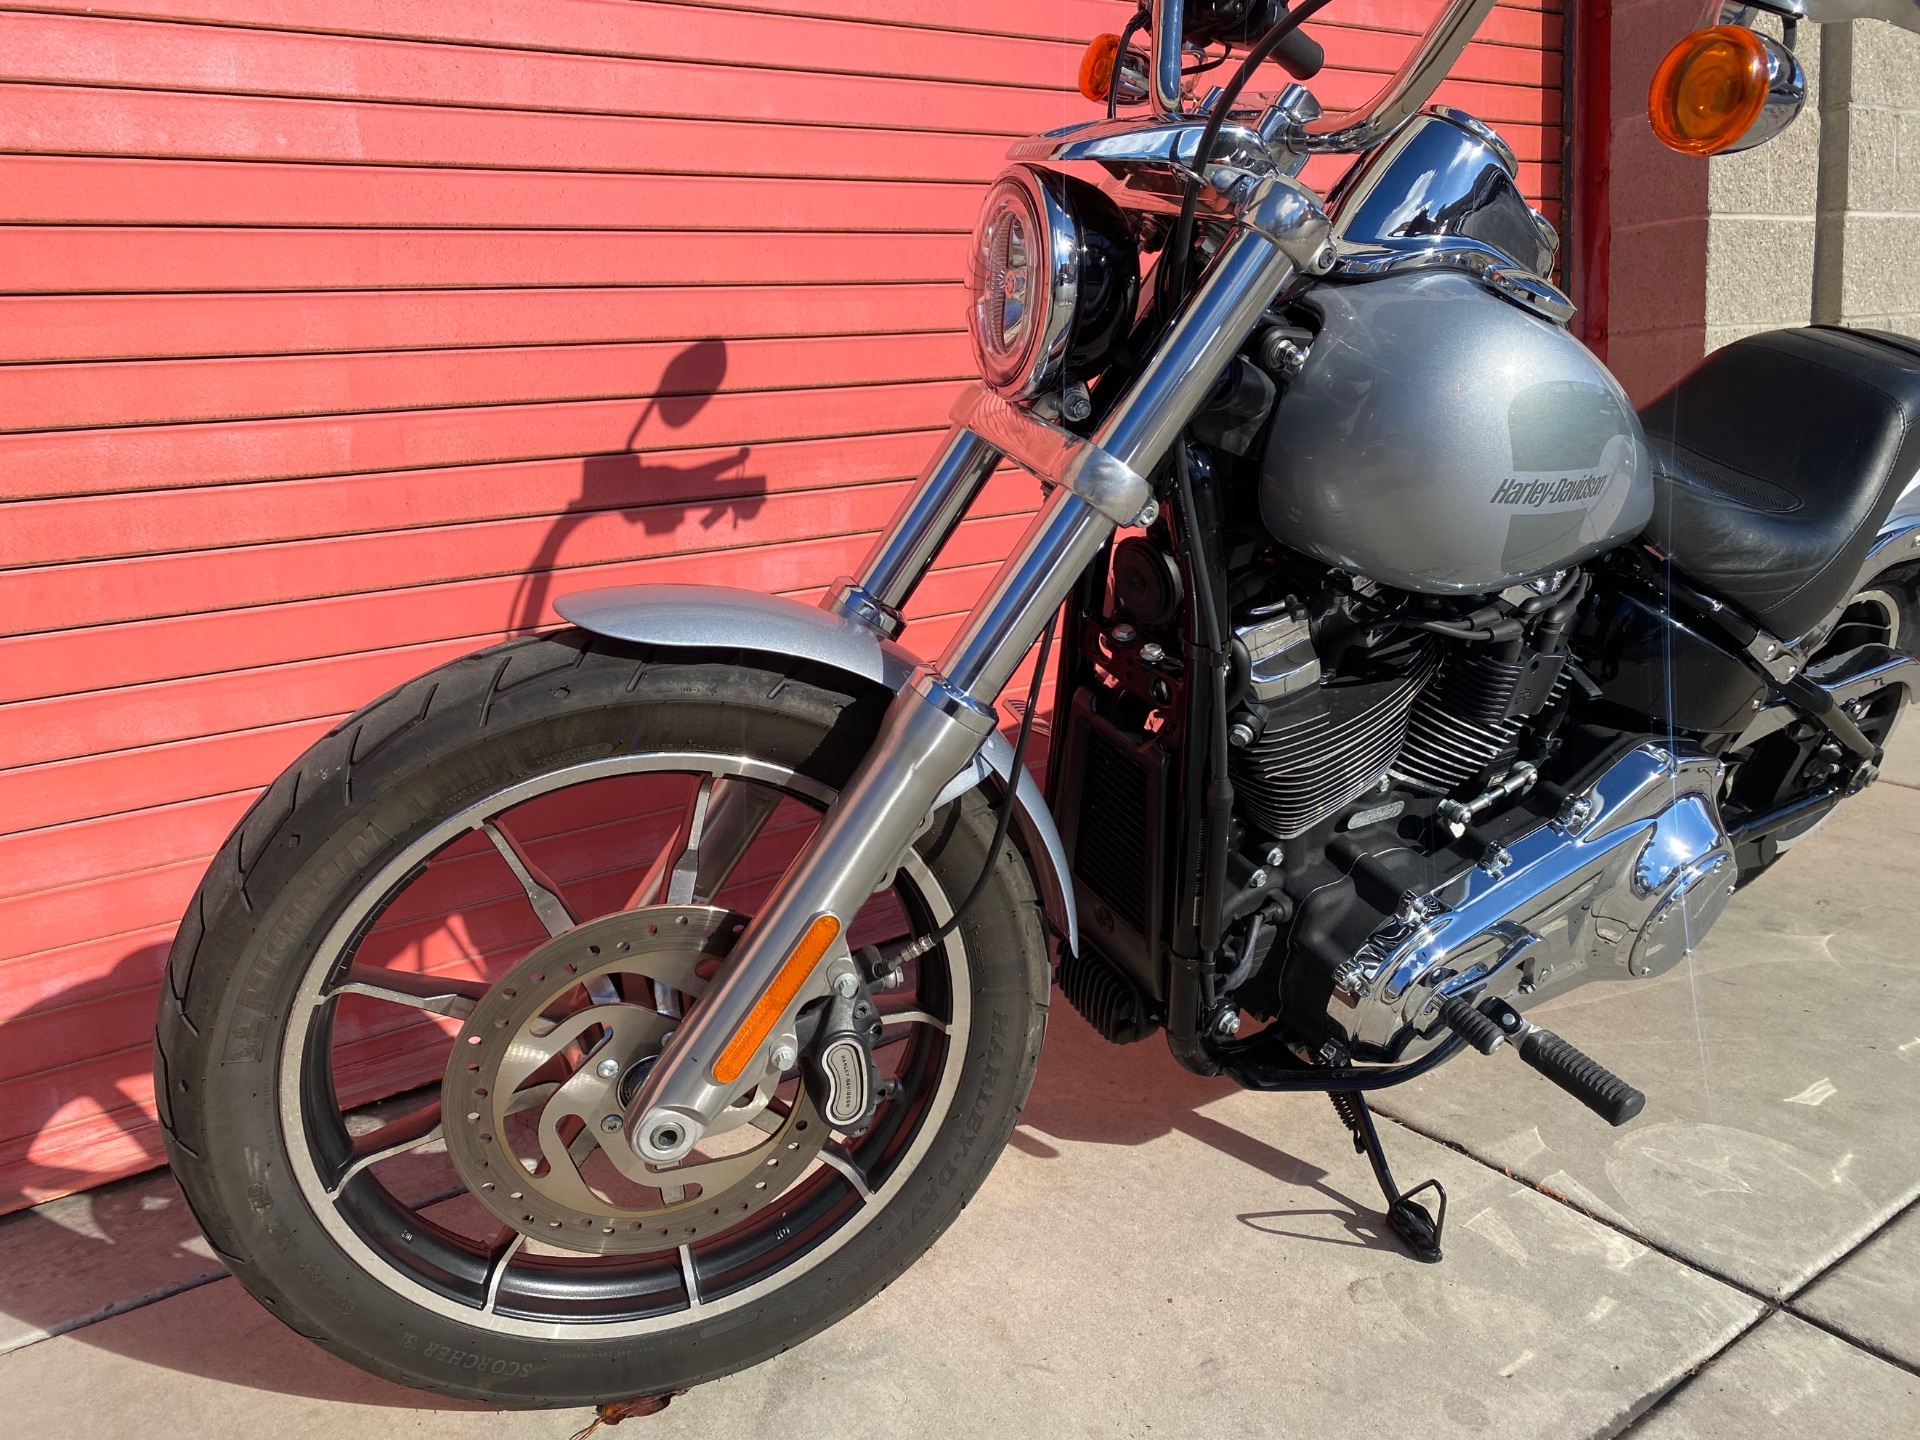 2019 Harley-Davidson Low Rider® in Sandy, Utah - Photo 6